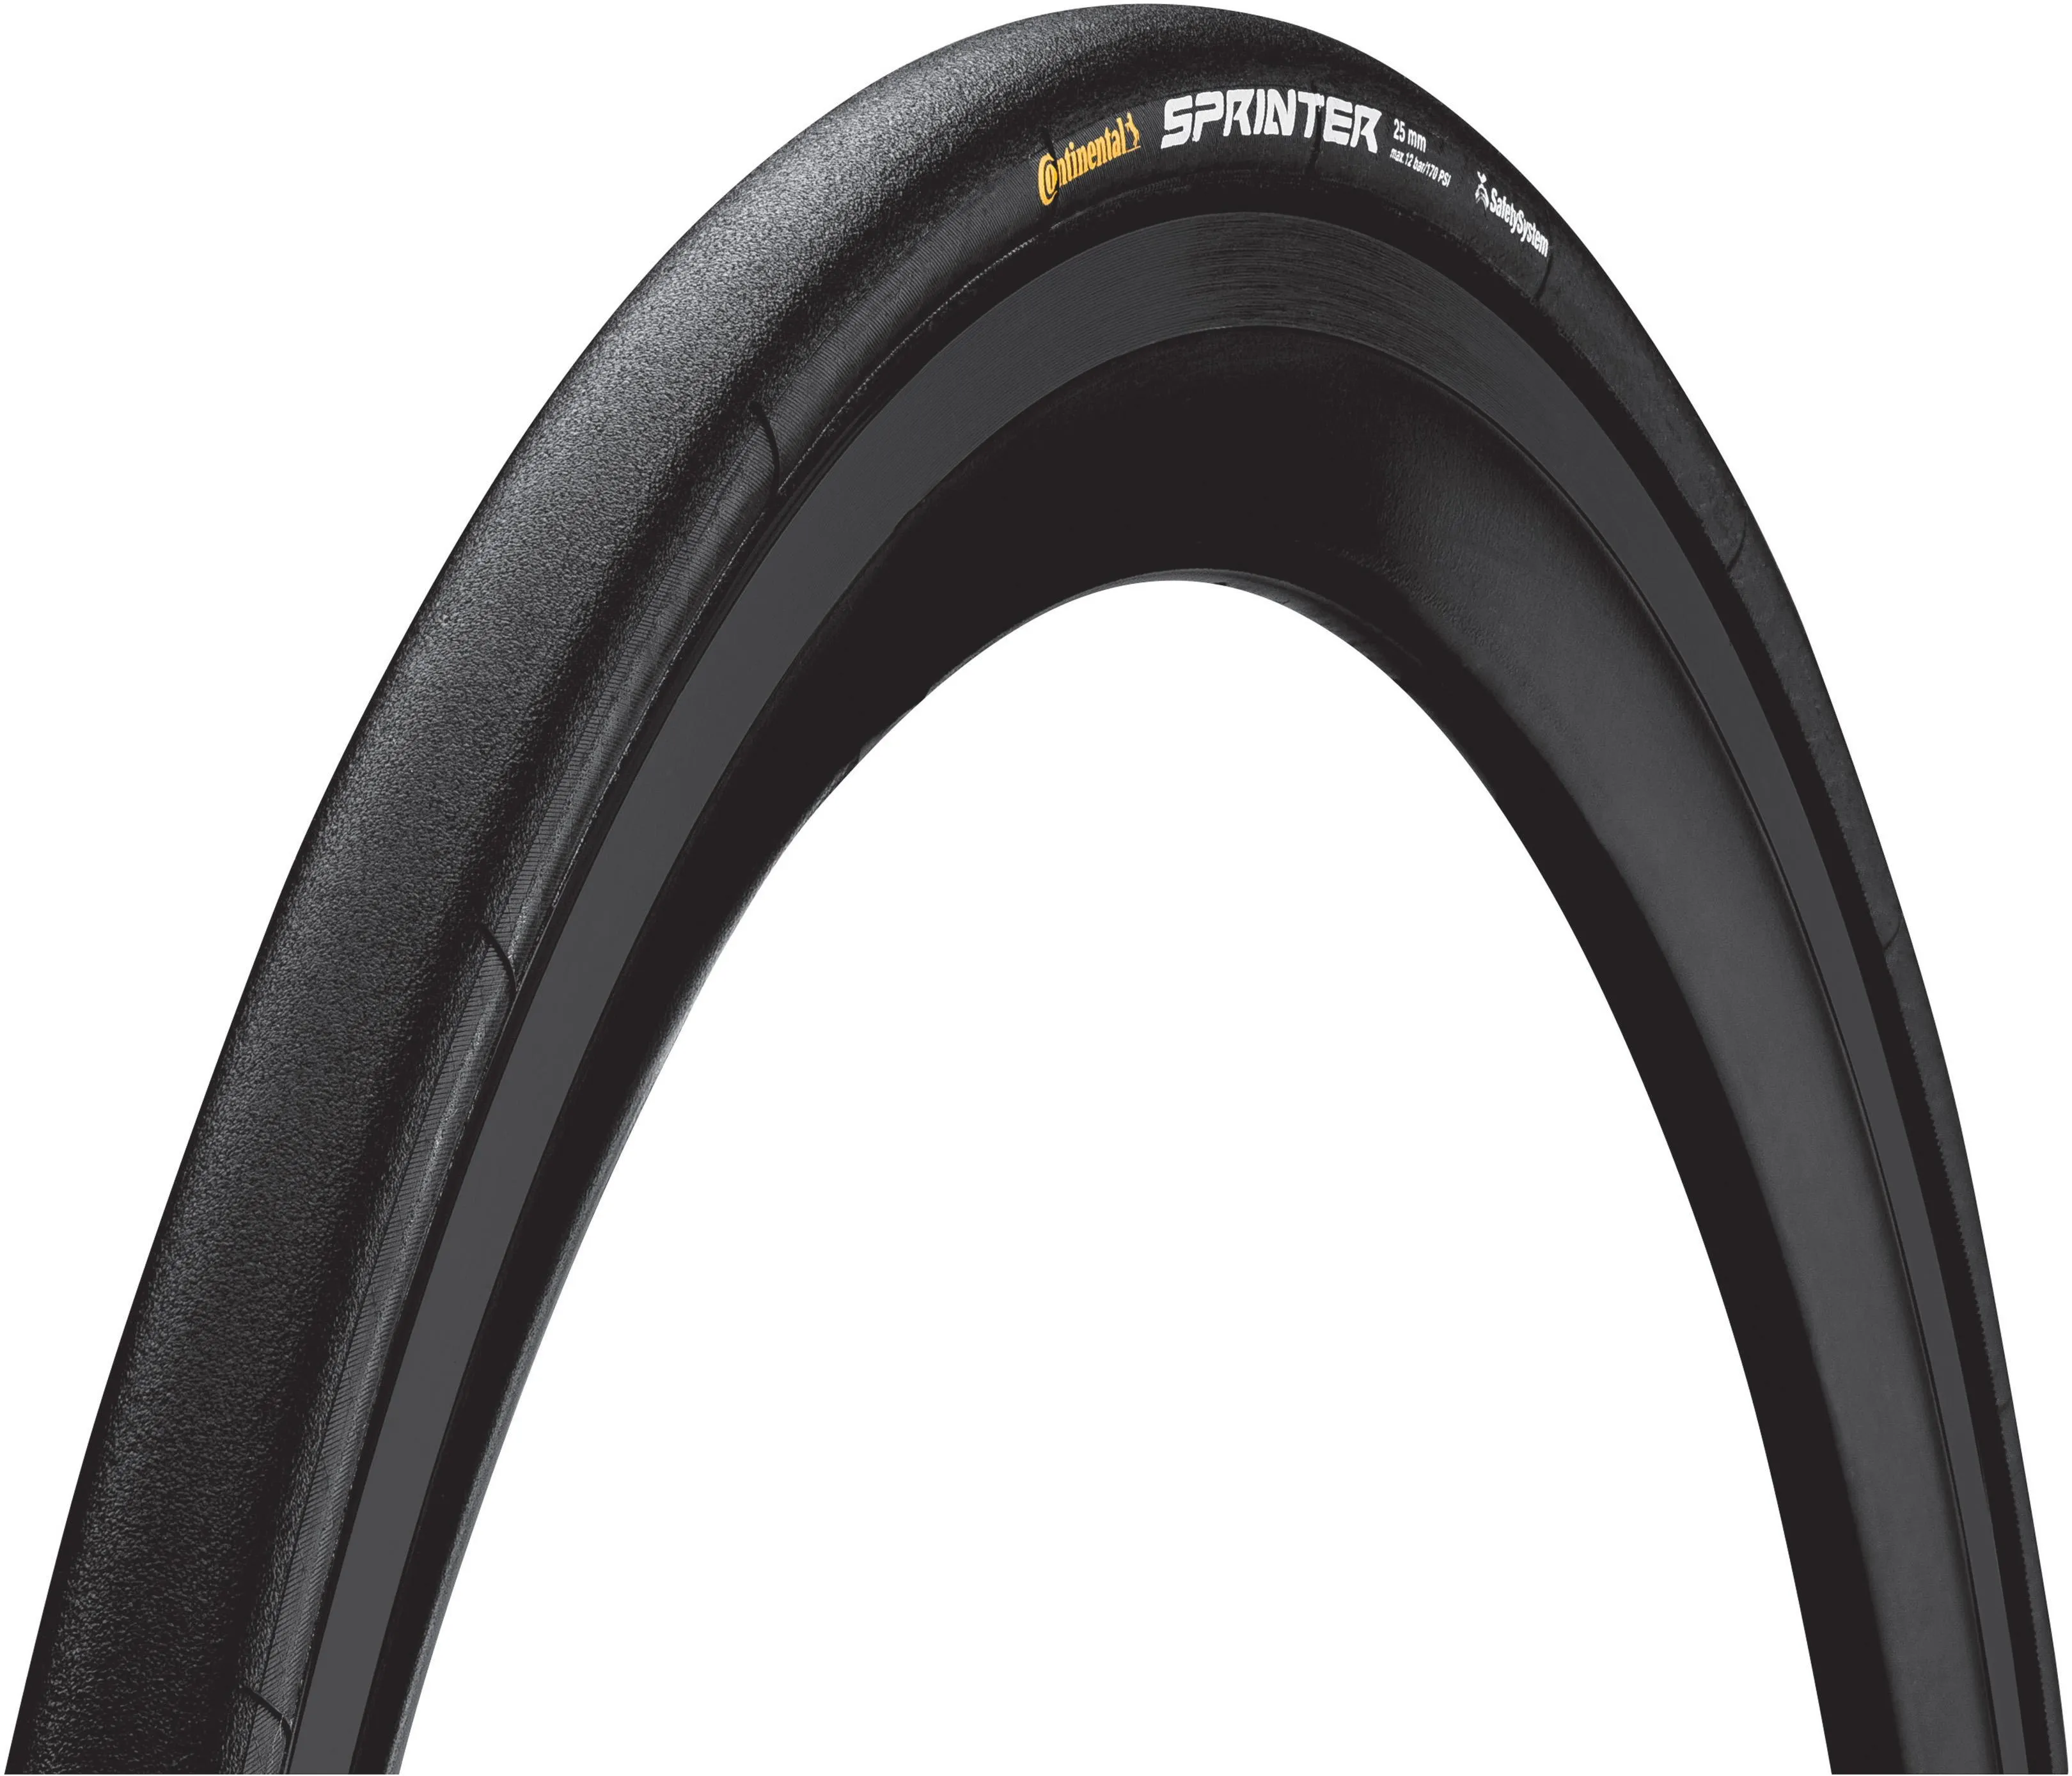  Sprinter Tubular Road Bike Tyre, Black